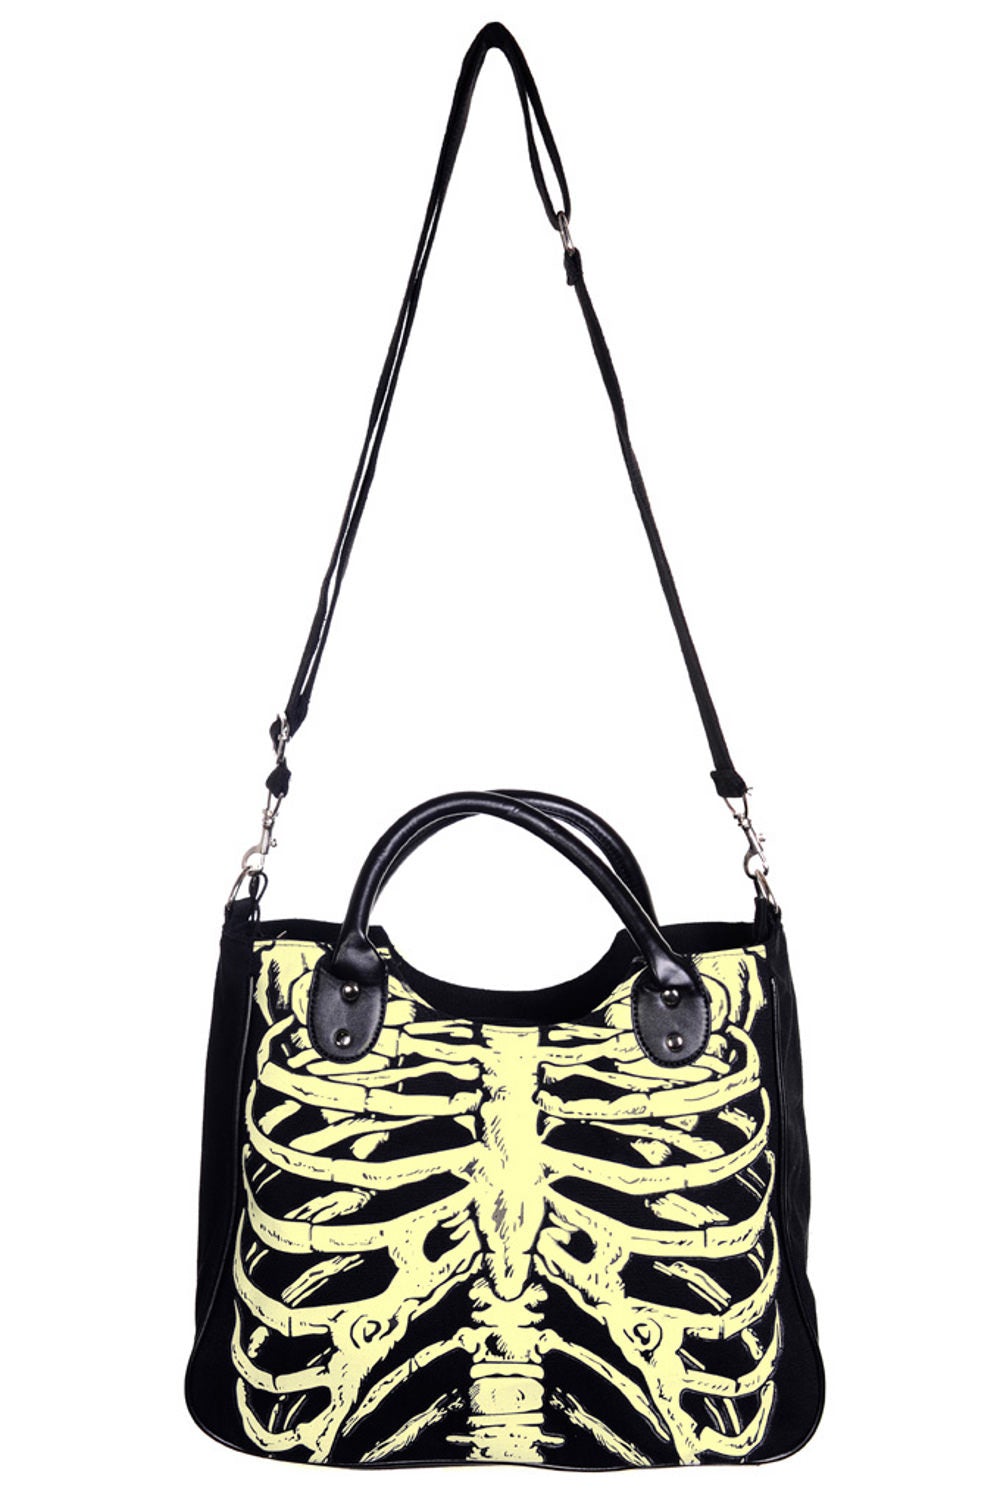 Long strapped shoulder handbag with glow in the dark ribcage skeleton print. 